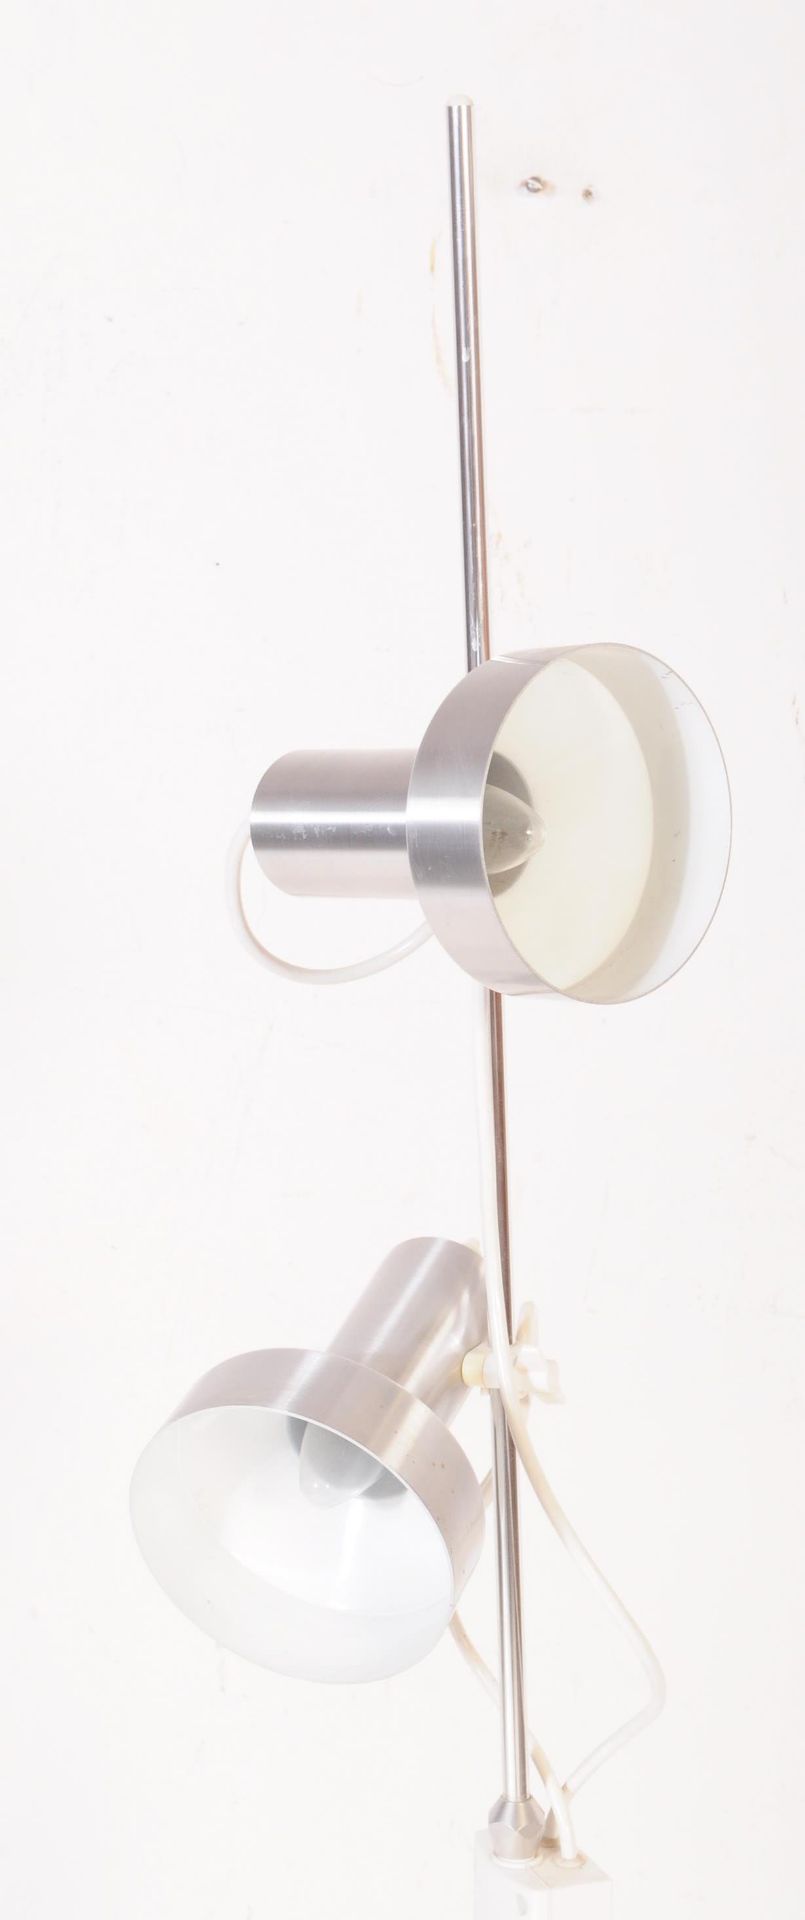 A RETRO ALUMINIUM FLOOR STANDING ADJUSTABLE TWO LIGHT LAMP - Image 2 of 4